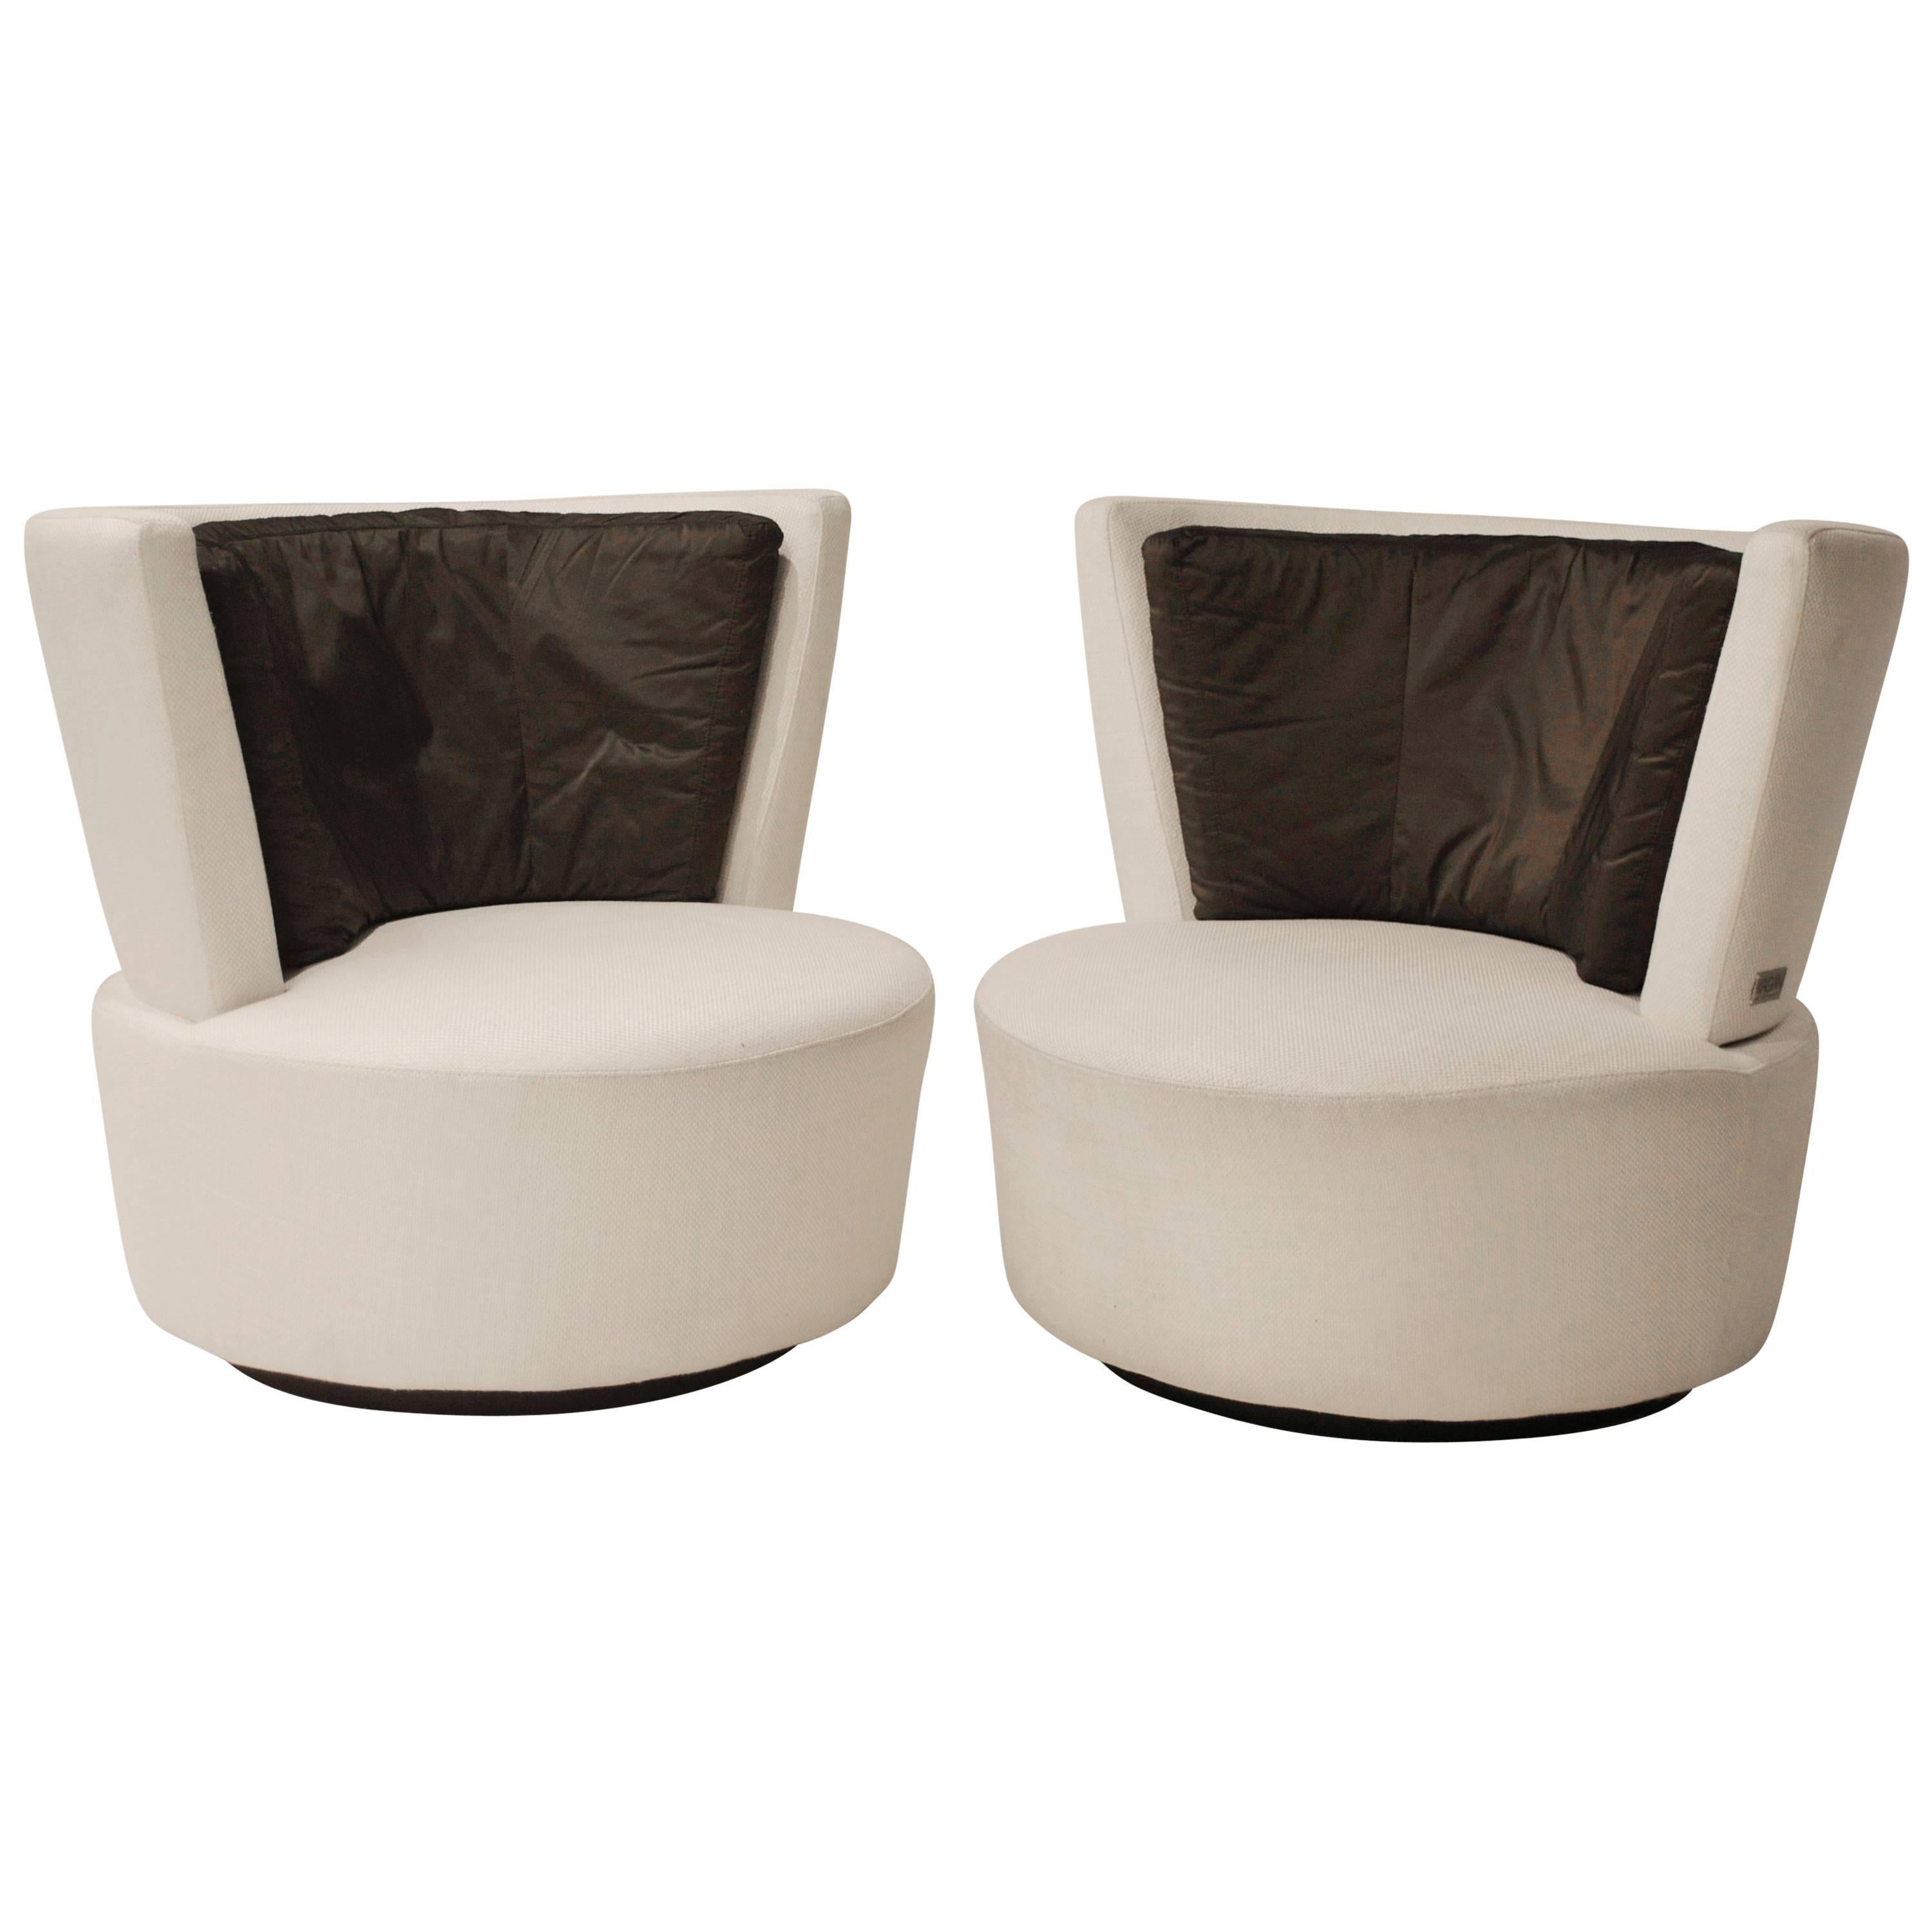 Custom Designed Swivel Chairs by Vladimir Kagan, USA, 1980s For Sale